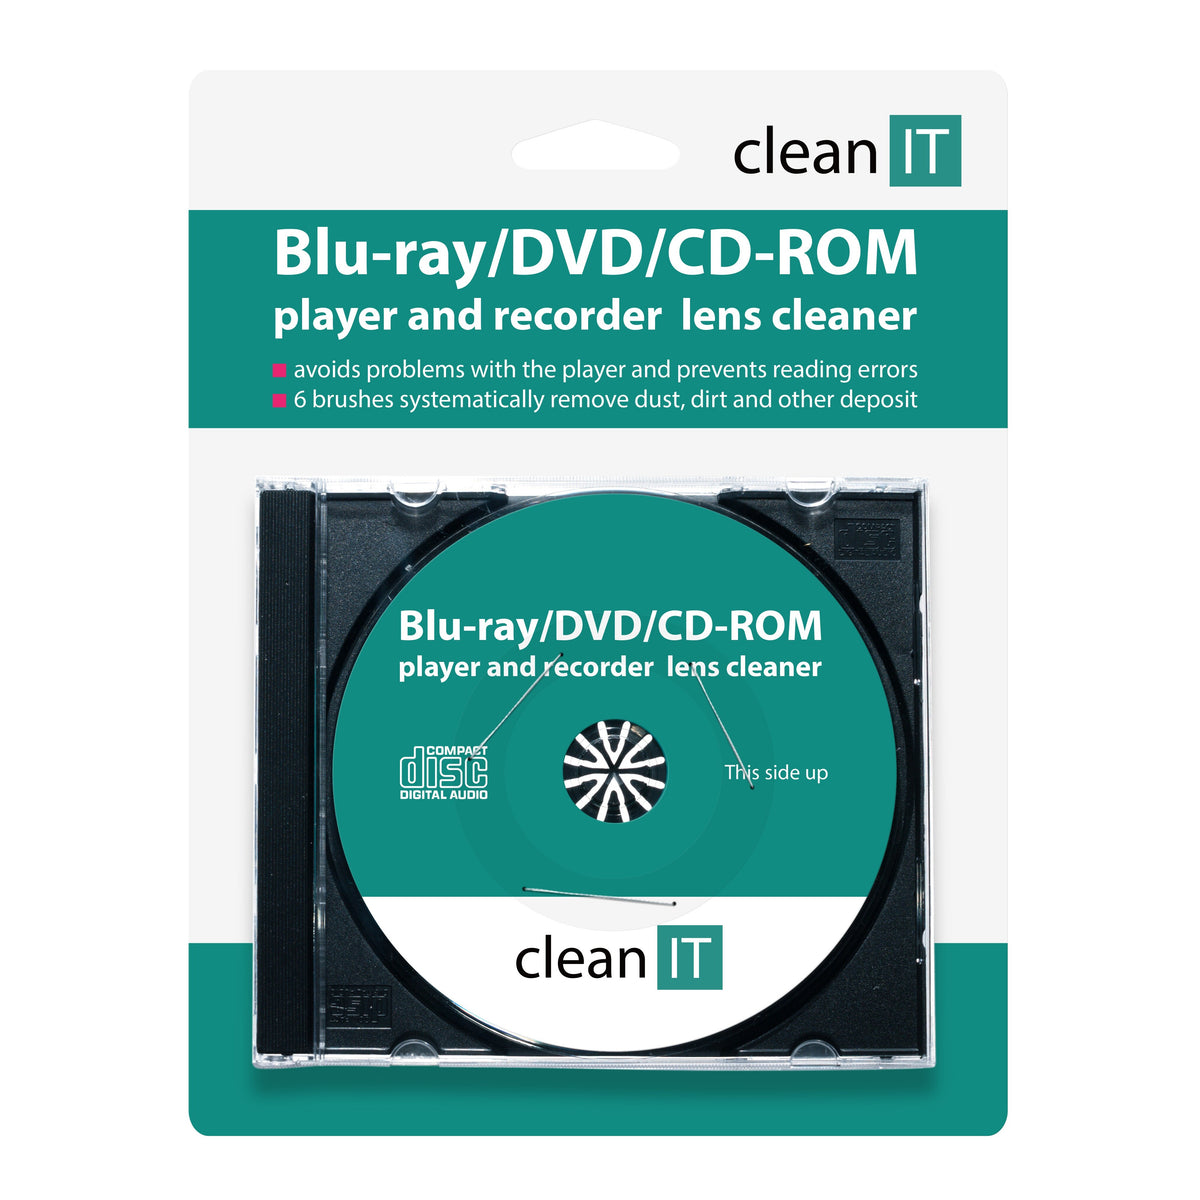 Čistiace CD CLEAN IT pro Blu-ray/DVD/CD-ROM (CL-320)